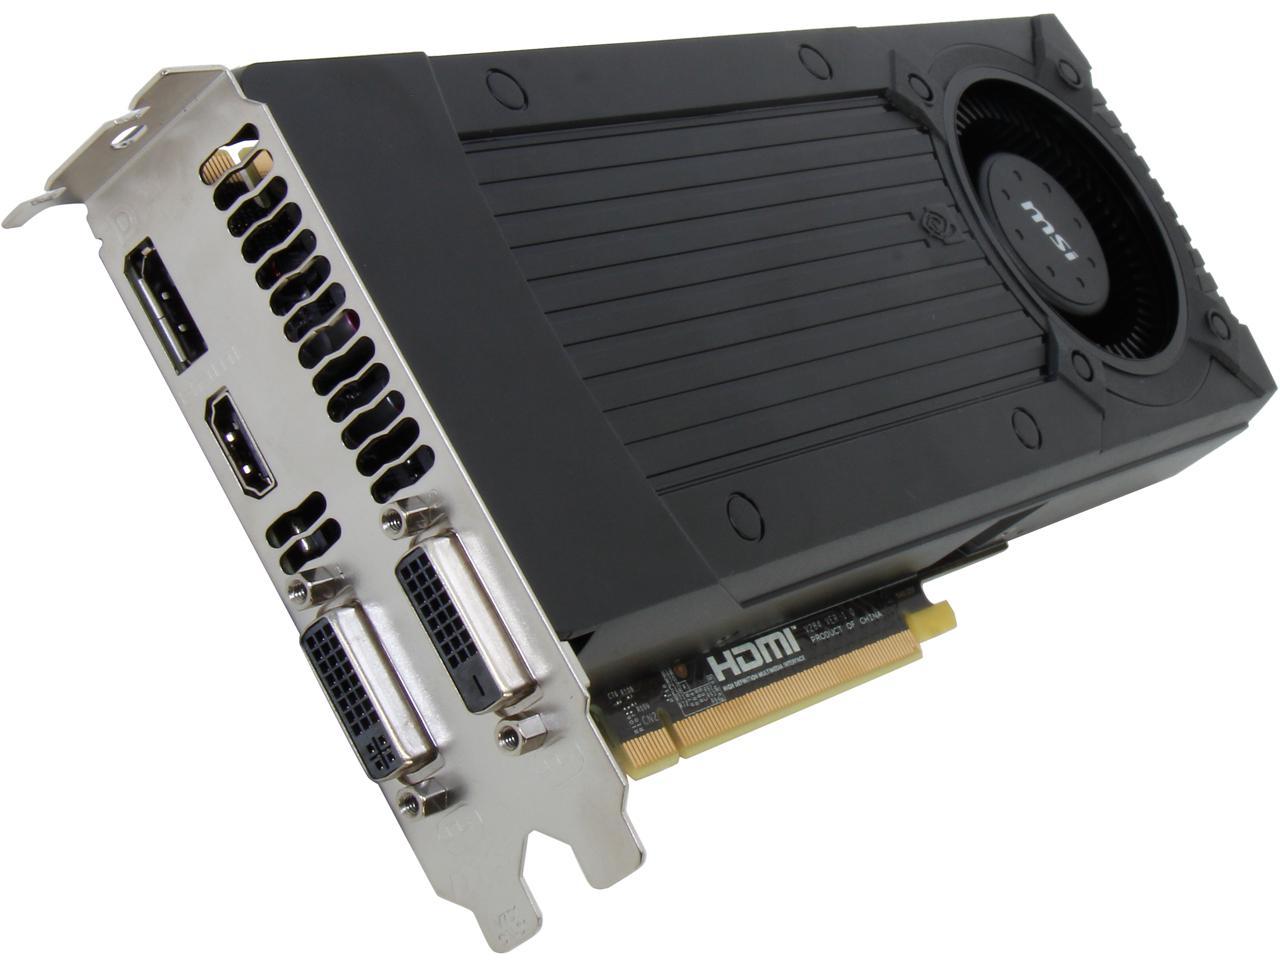 MSI NVIDIA GeForce GTX 760 2 GB GTX760 HDMI 2×DVI Video Card 256bit GAMING 2G D5